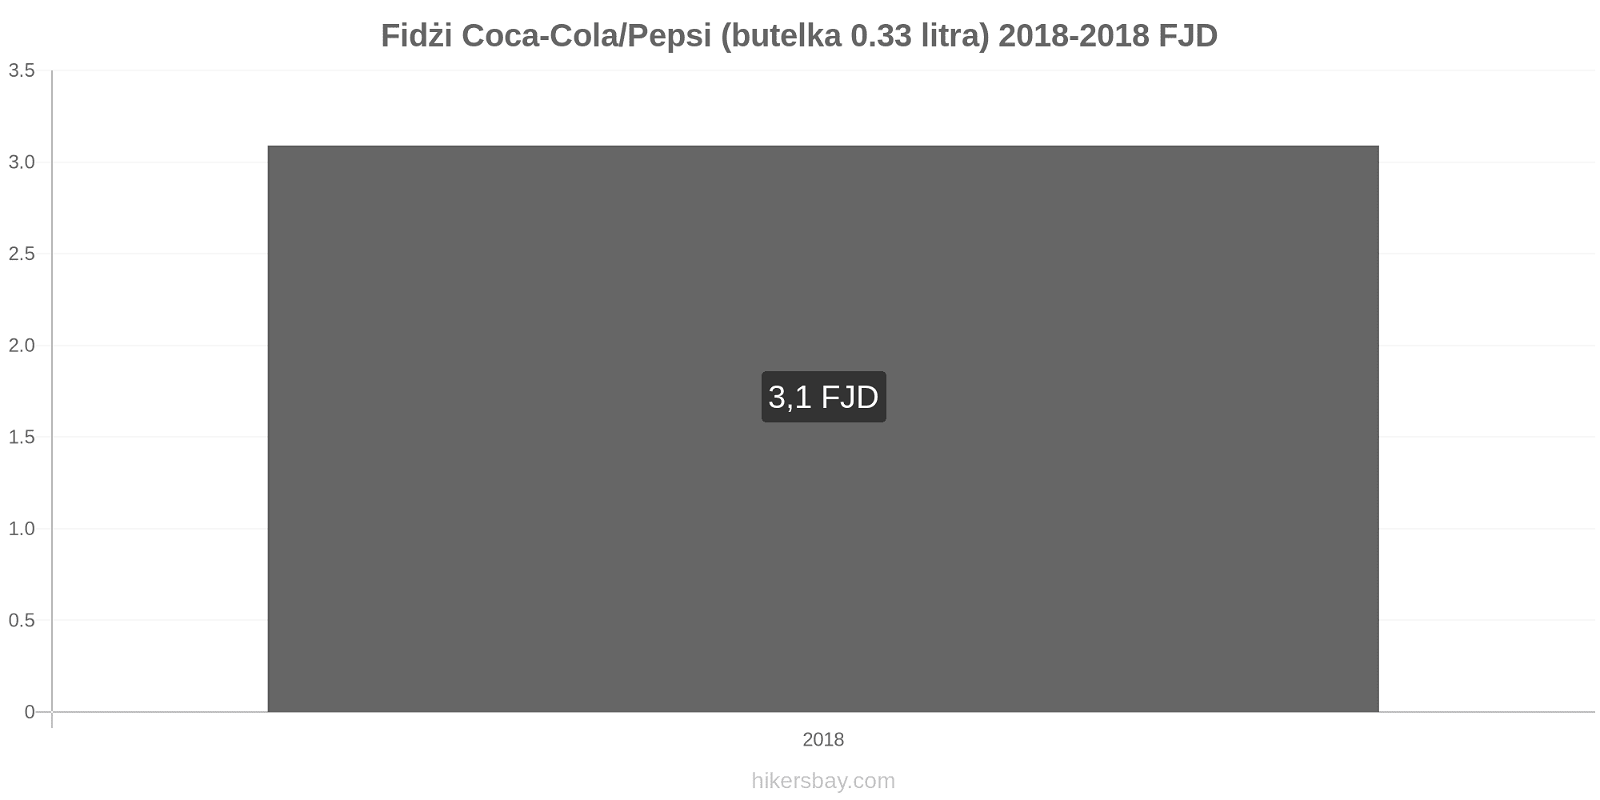 Fidżi zmiany cen Coca-Cola/Pepsi (butelka 0.33 litra) hikersbay.com